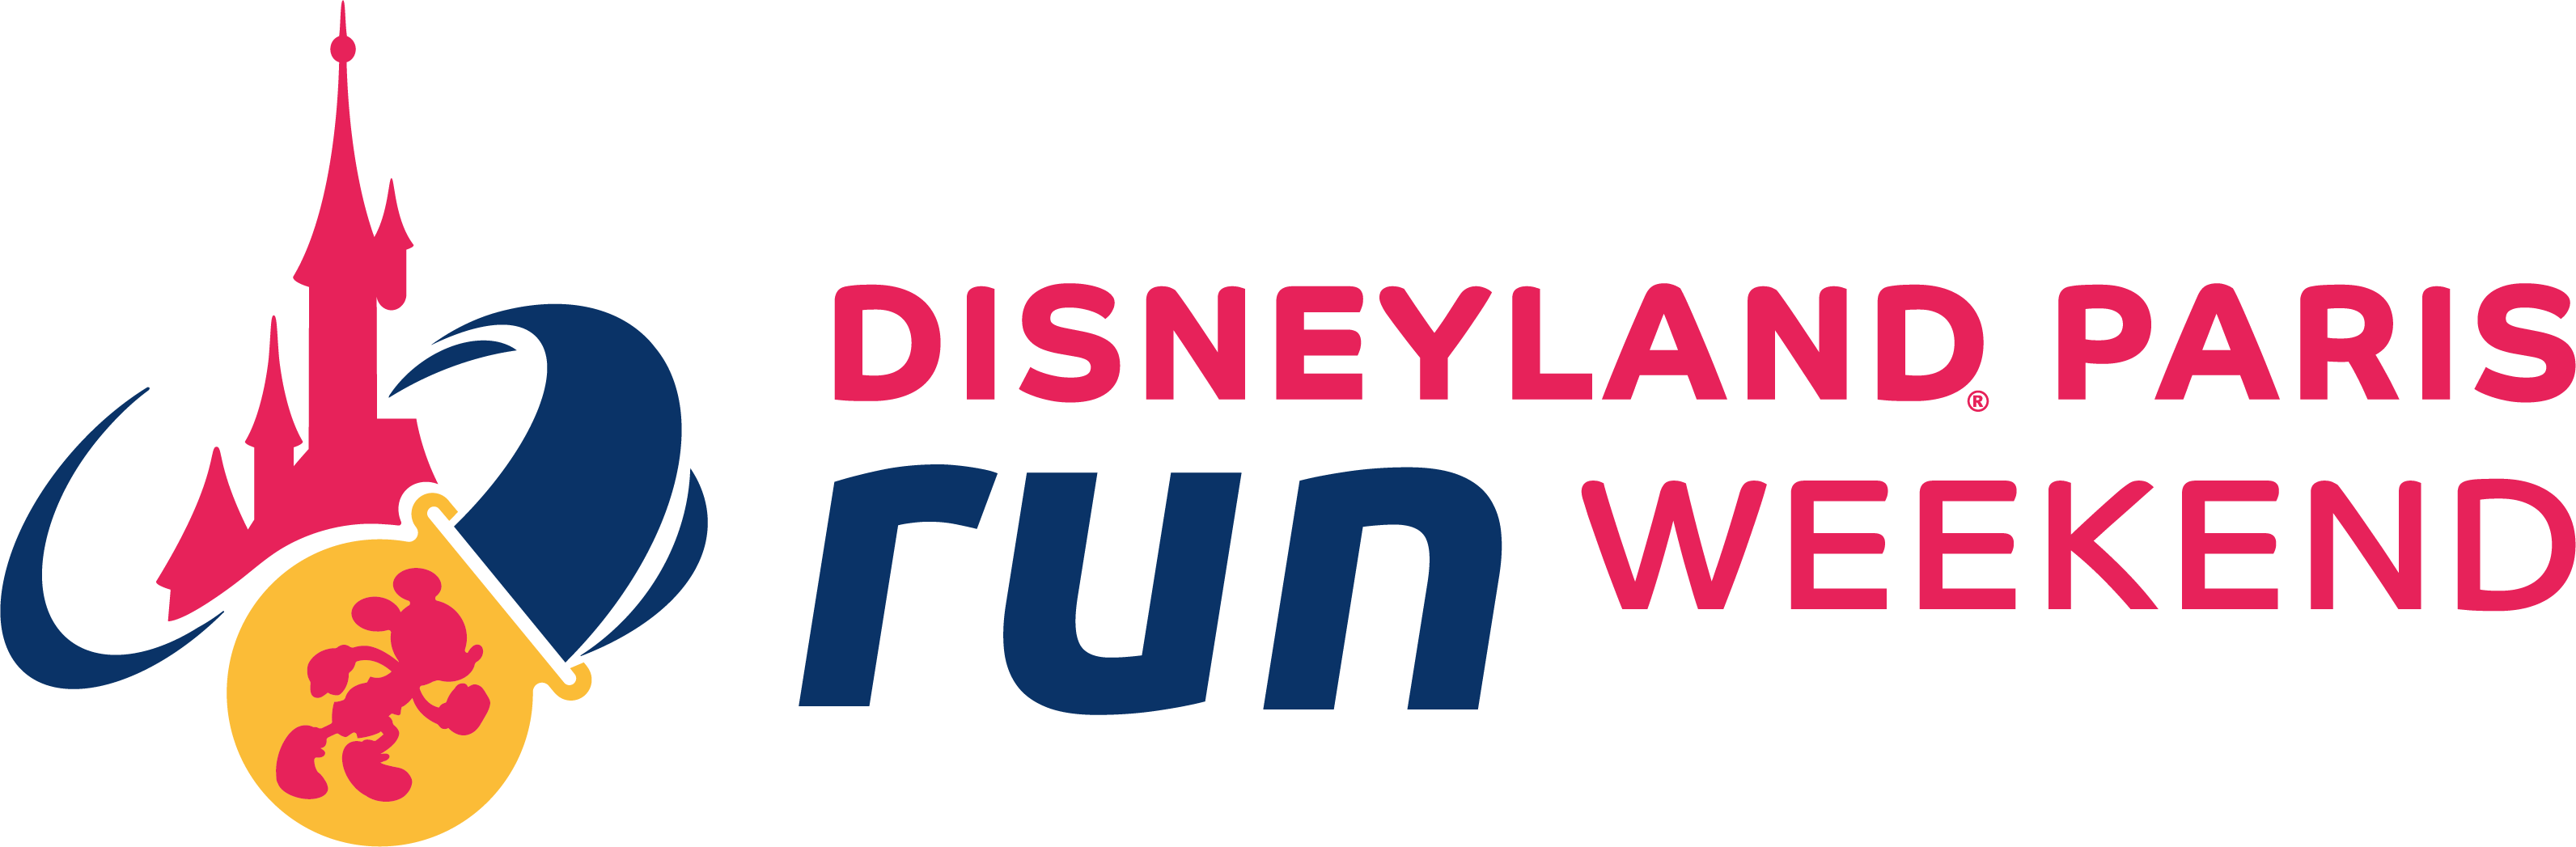 Run weekend. Weekender лого. Disneyland Paris logo. Disneyland Paris Magic. Russia Running logo.